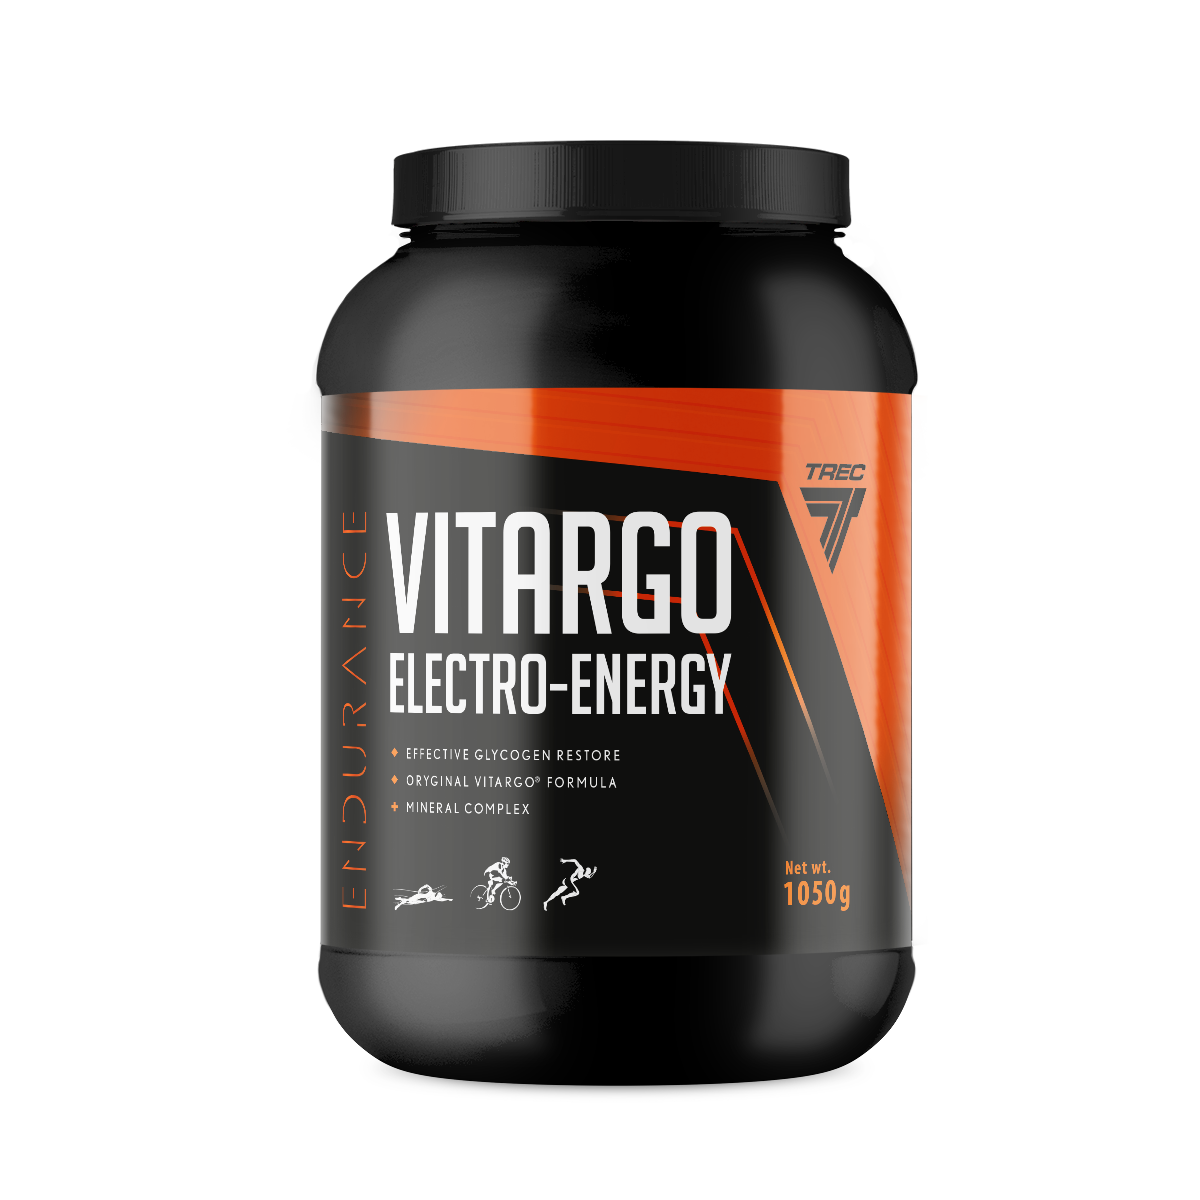 VITARGO ELECTRO-ENERGY Endurance - opatentowana formuła węglowodanowa VITARGO ELECTRO-ENERGY